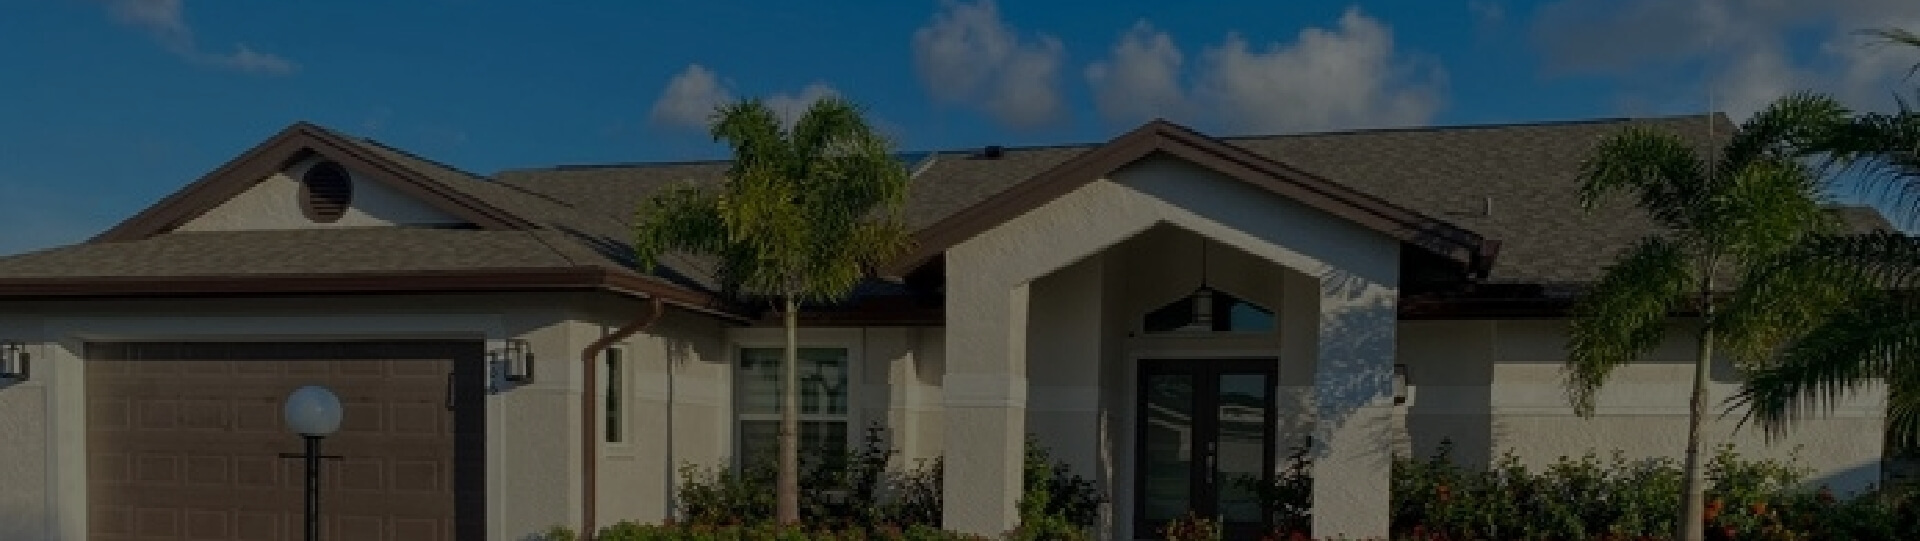 Shingle Roof on single floor home in Florida